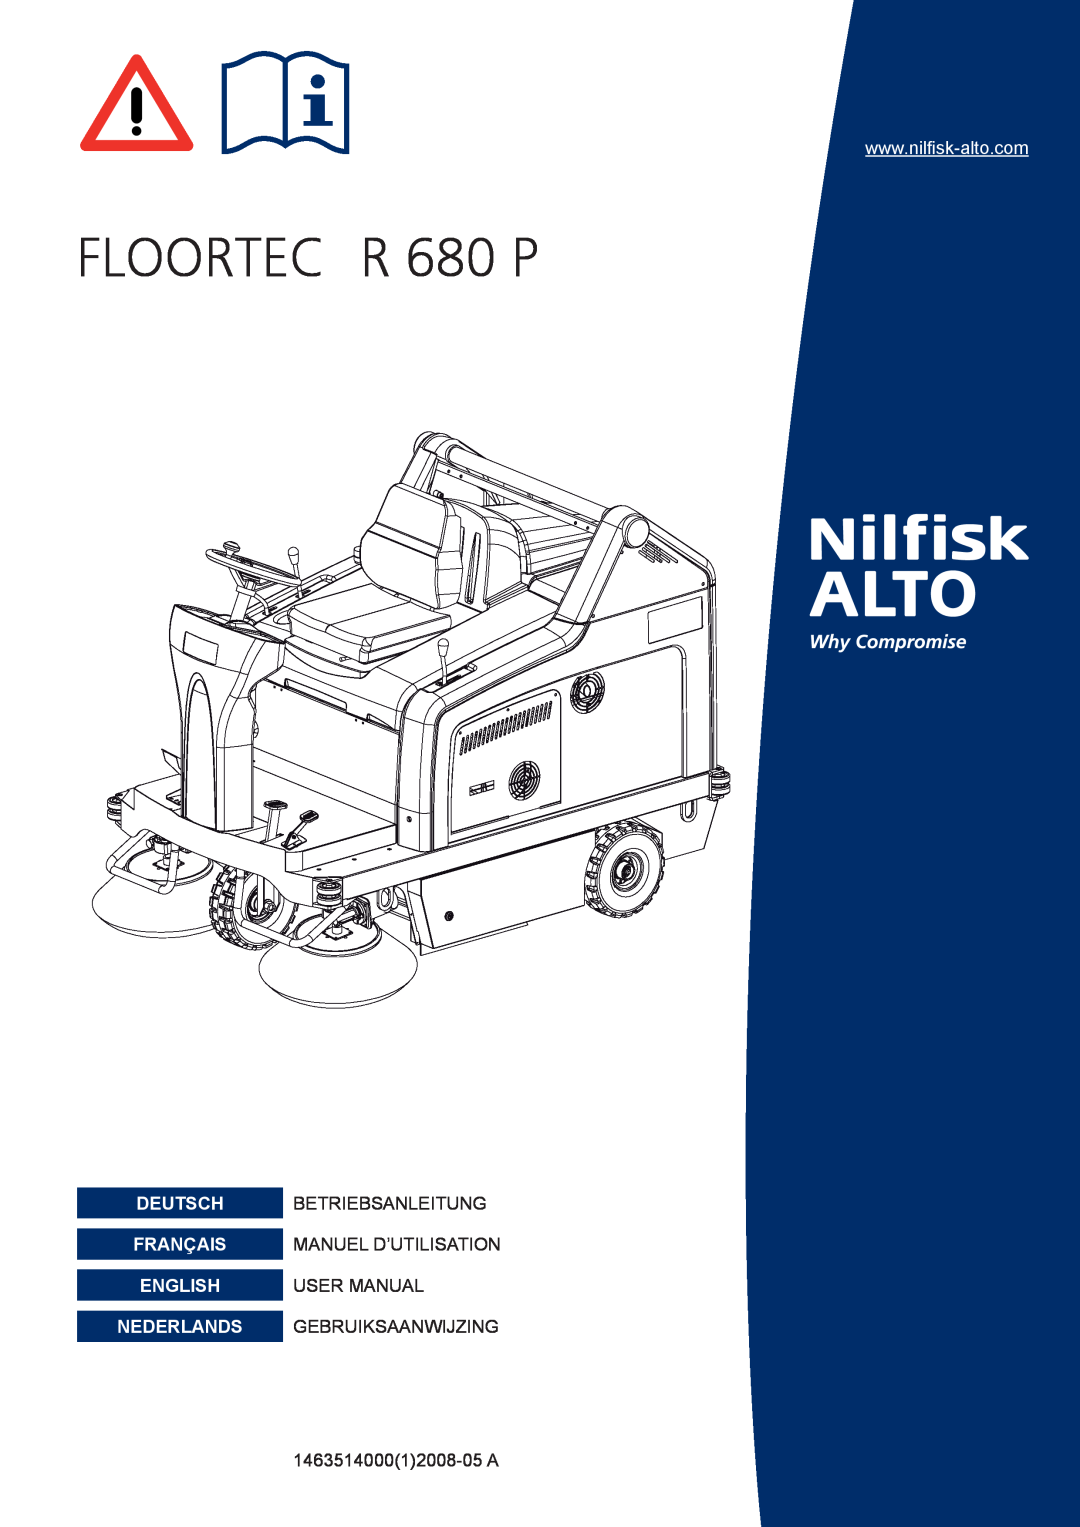 Nilfisk-ALTO R 680 P manuel dutilisation Deutsch, Betriebsanleitung, Français, Manuel D’Utilisation, English, User Manual 